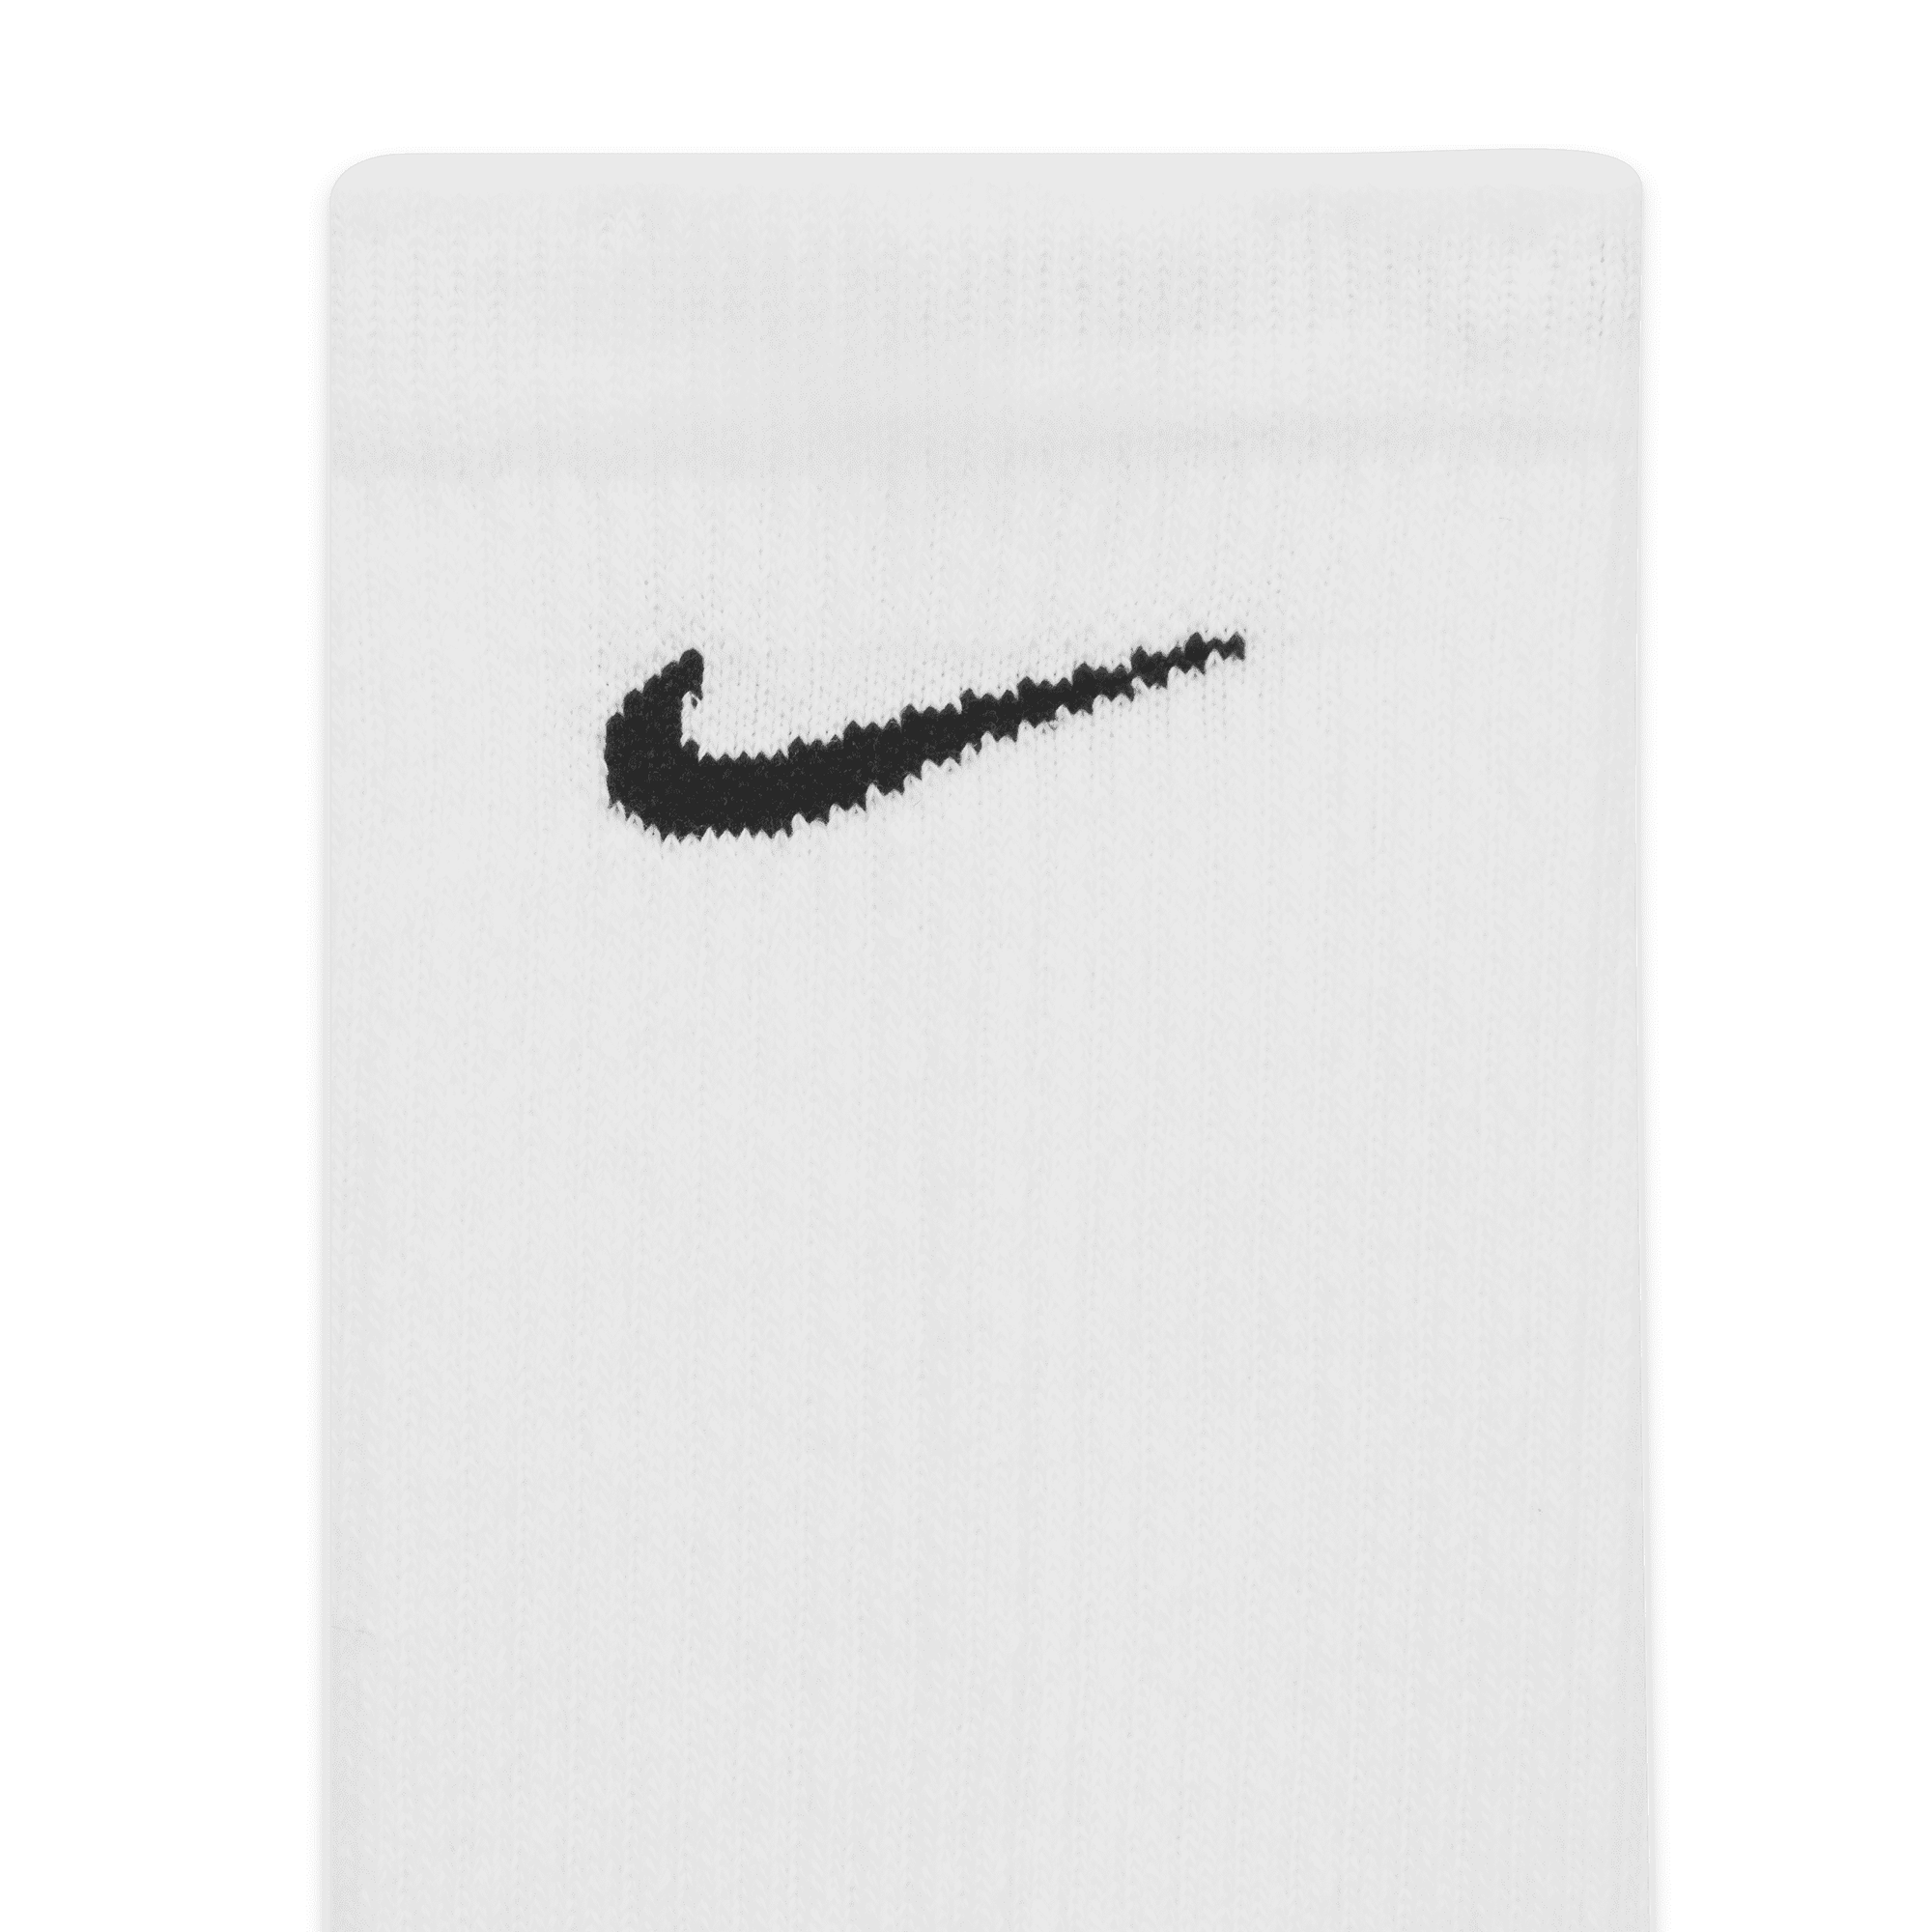 Shop Everyday Max Cushioned Crew Socks (3 Pairs) | Nike UAE